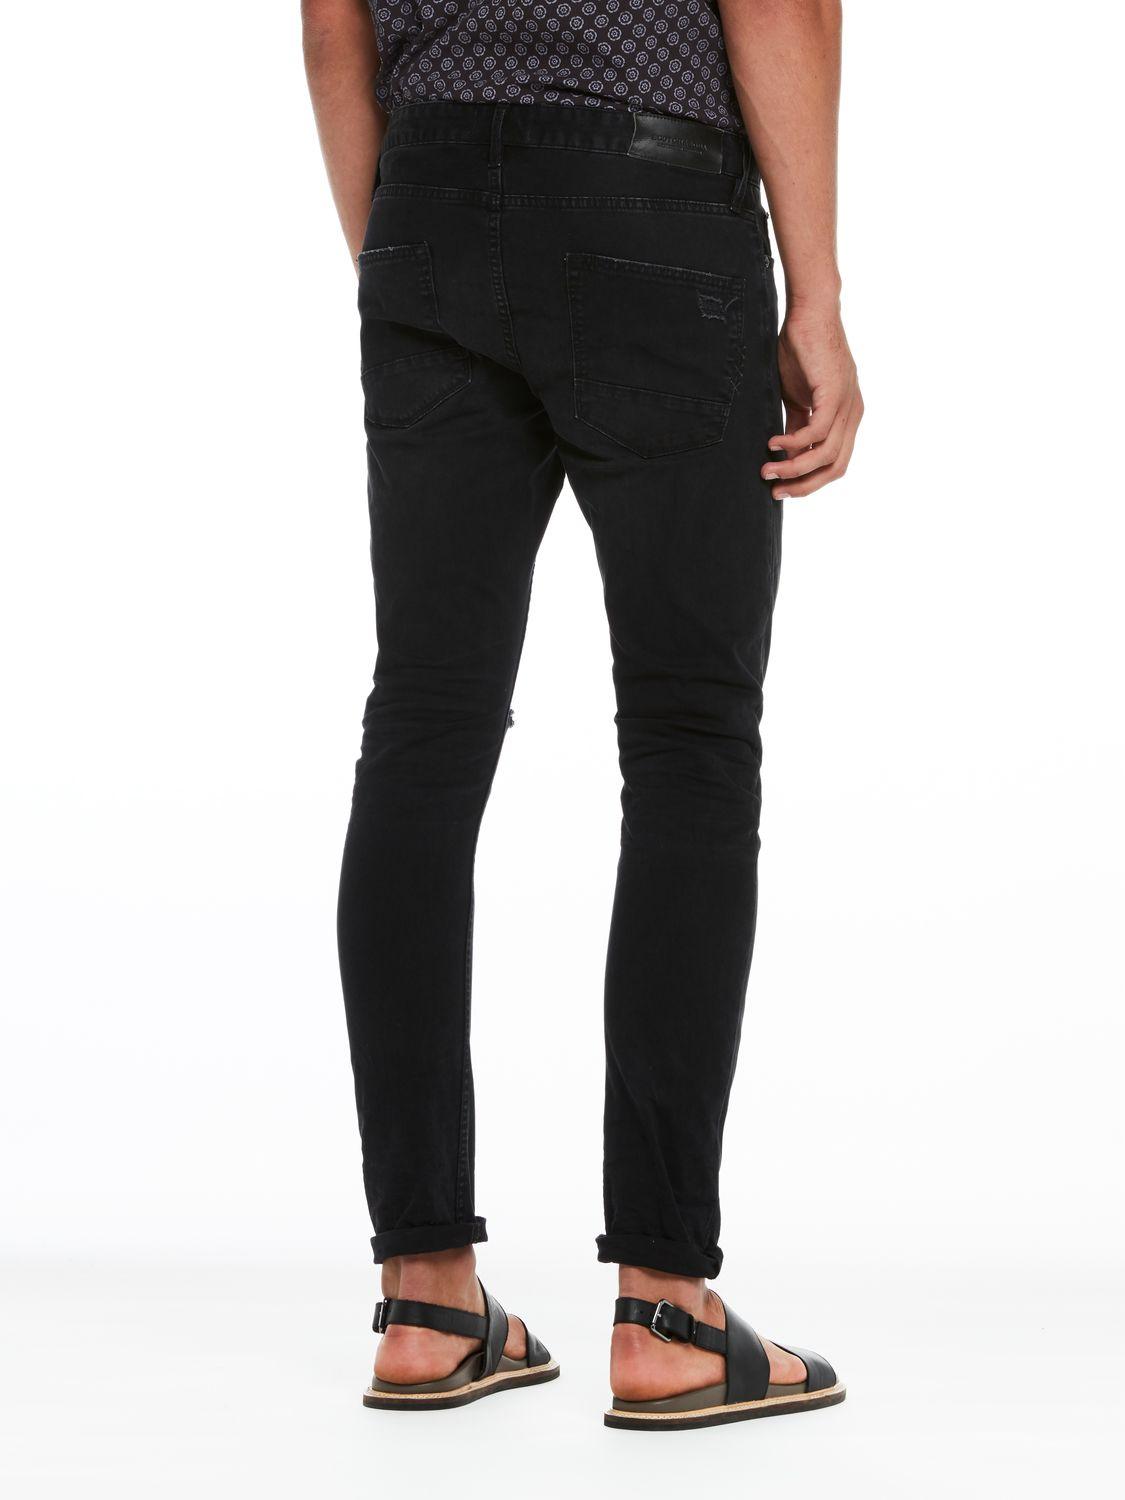 Scotch & Soda Denim Pike - Garment Dyed 5-pocket Pants Skinny Fit in Washed  Black (Black) for Men - Lyst